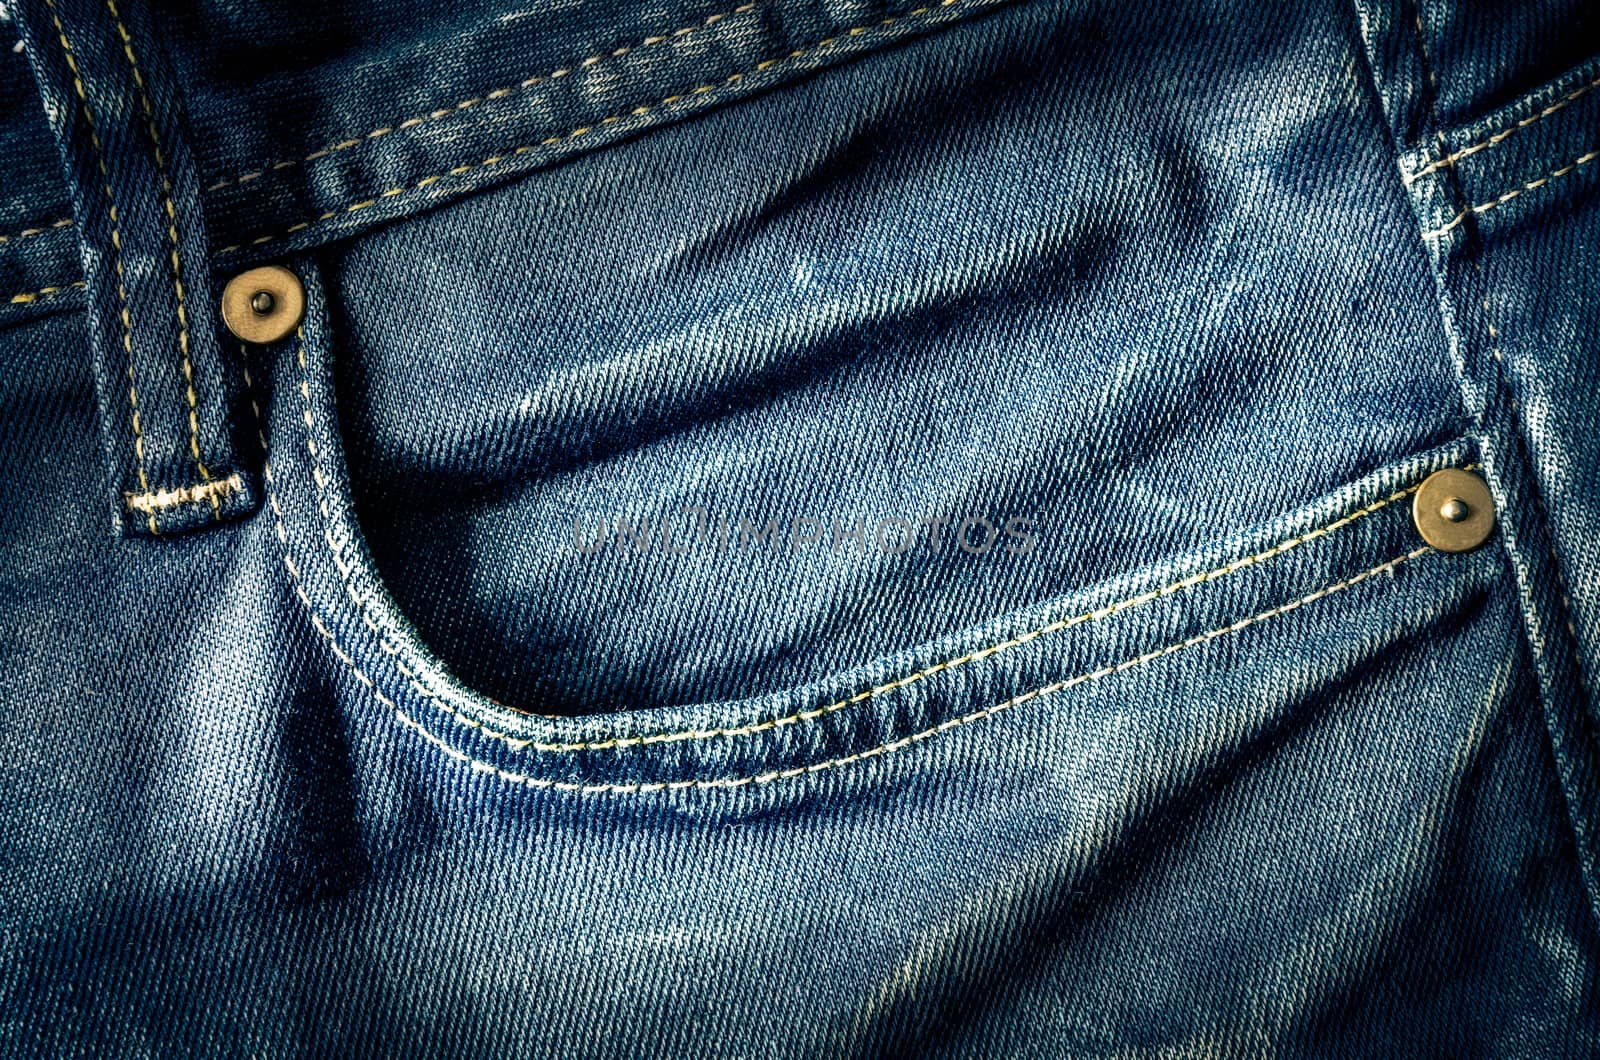 Detail of blue jeans pocket in old vintage style